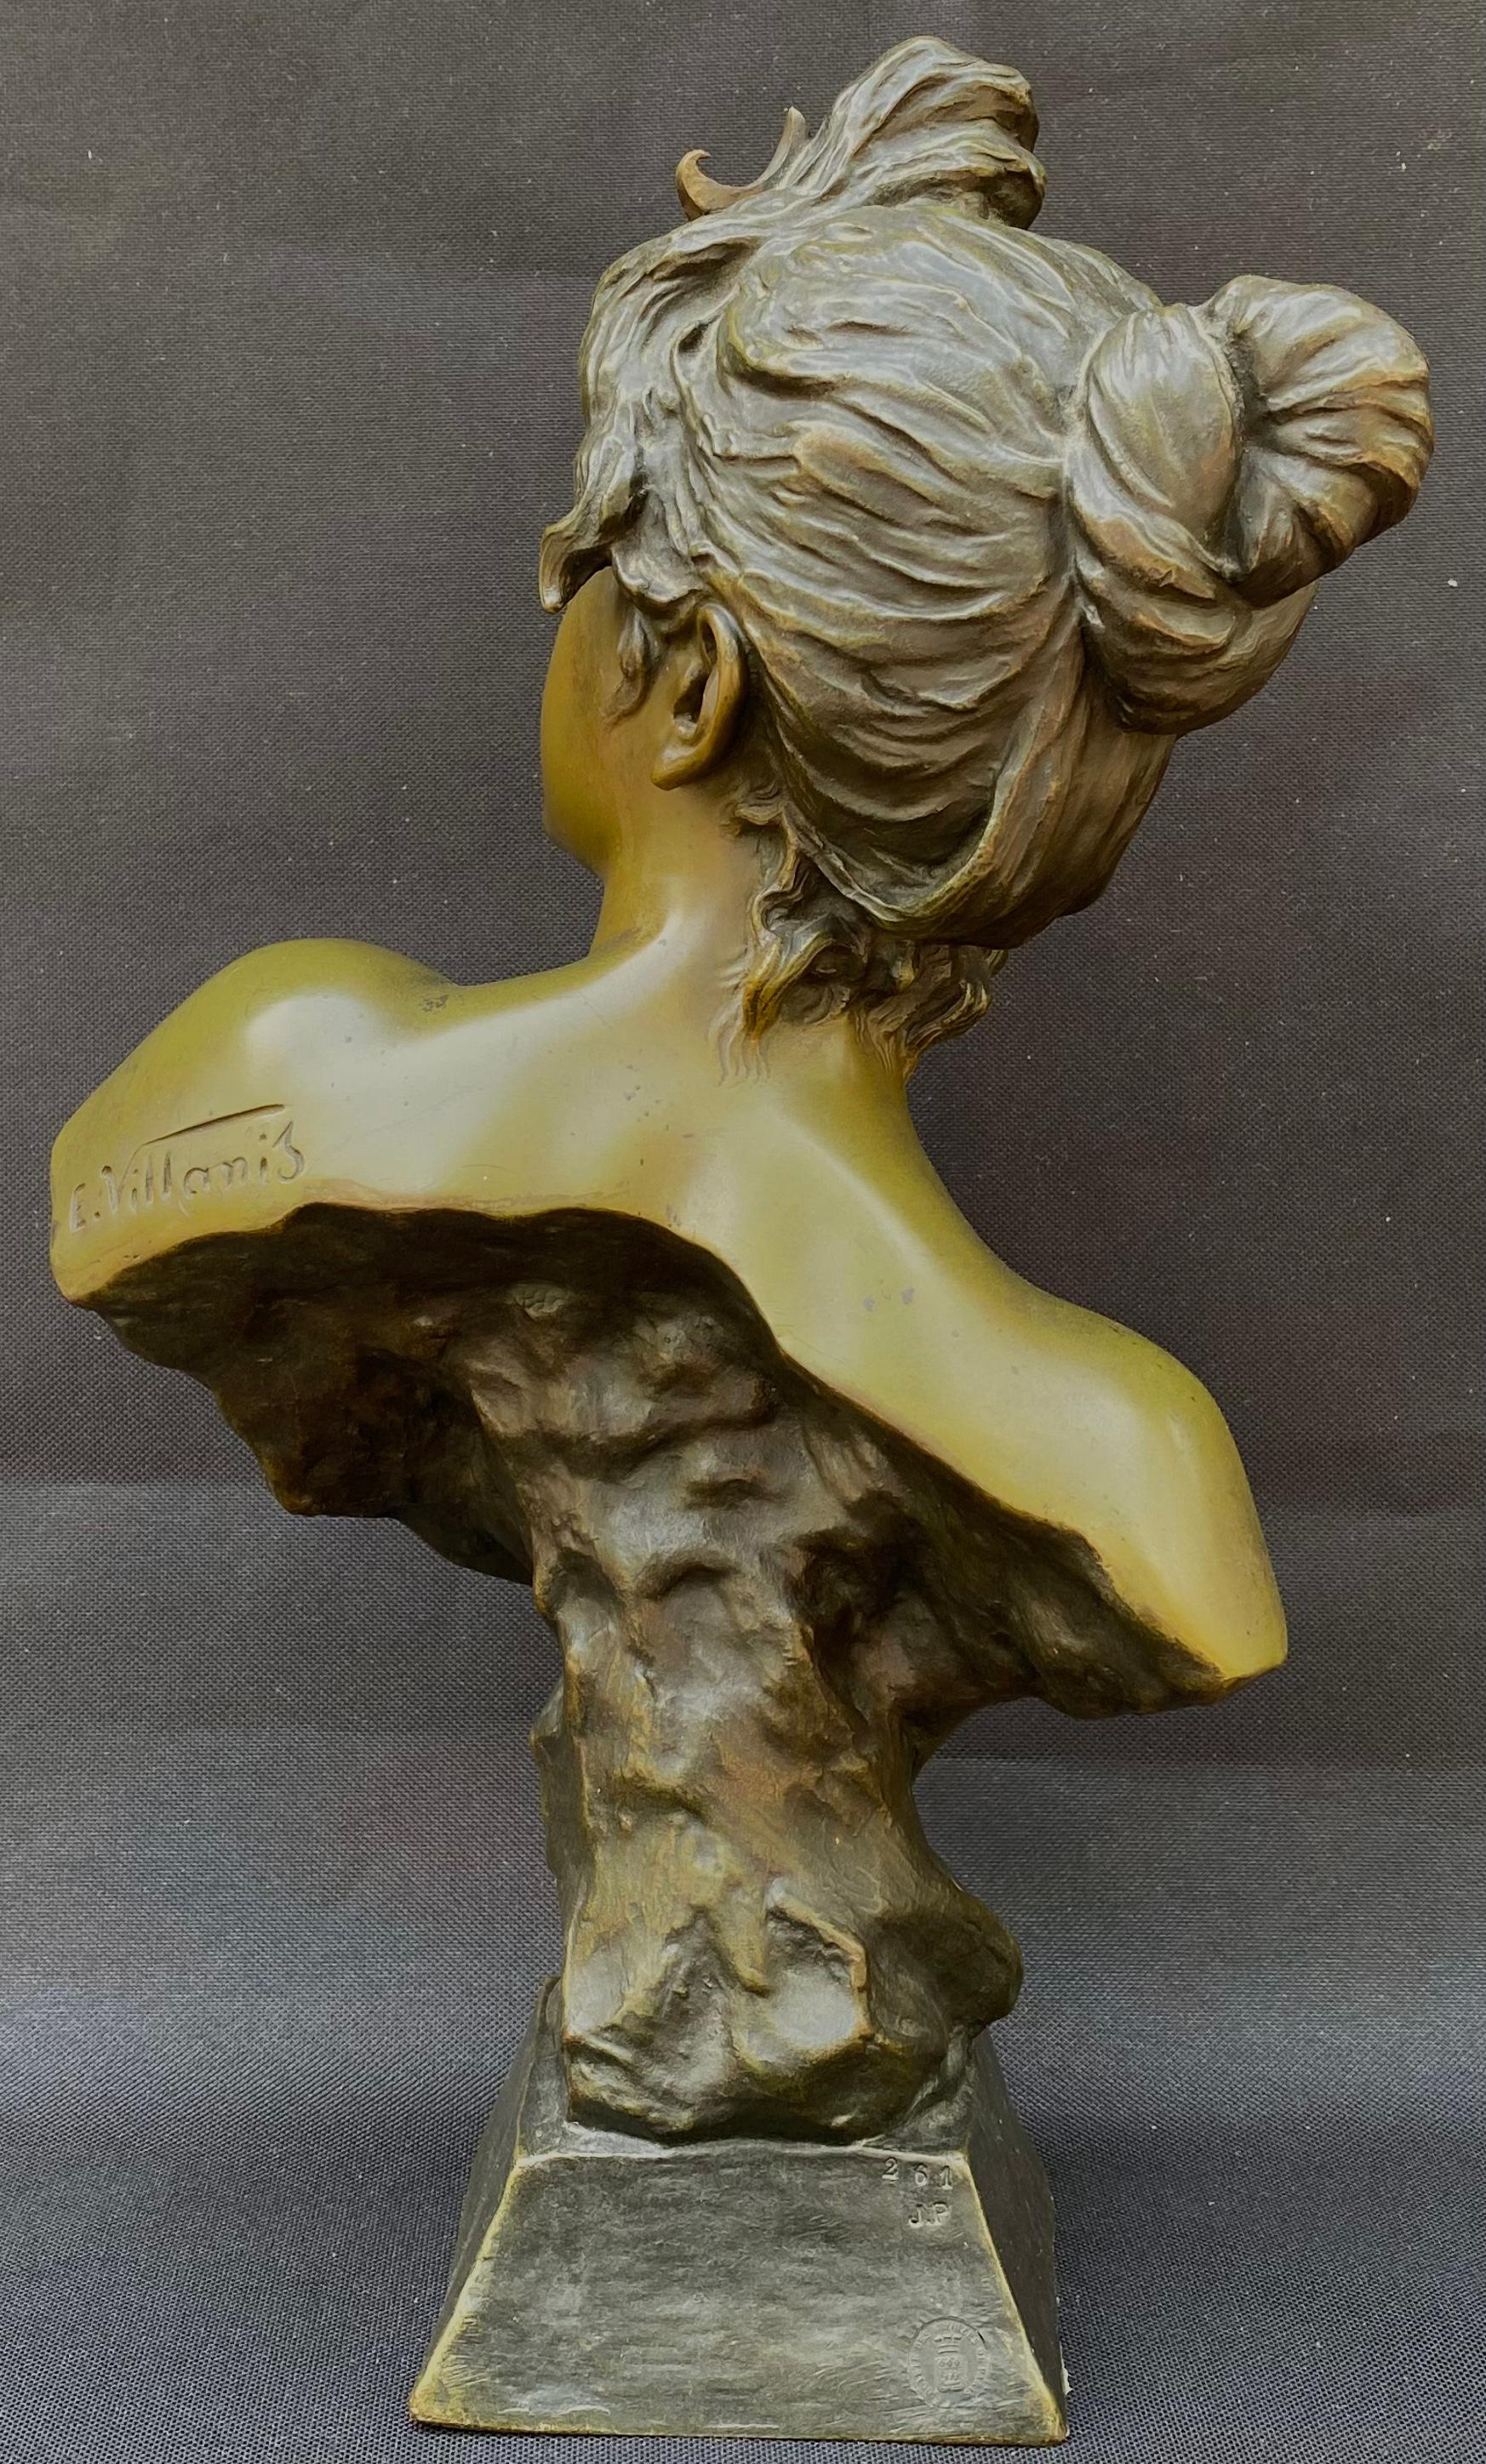 “Diana” - Gold Figurative Sculpture by Emmanuel Villanis